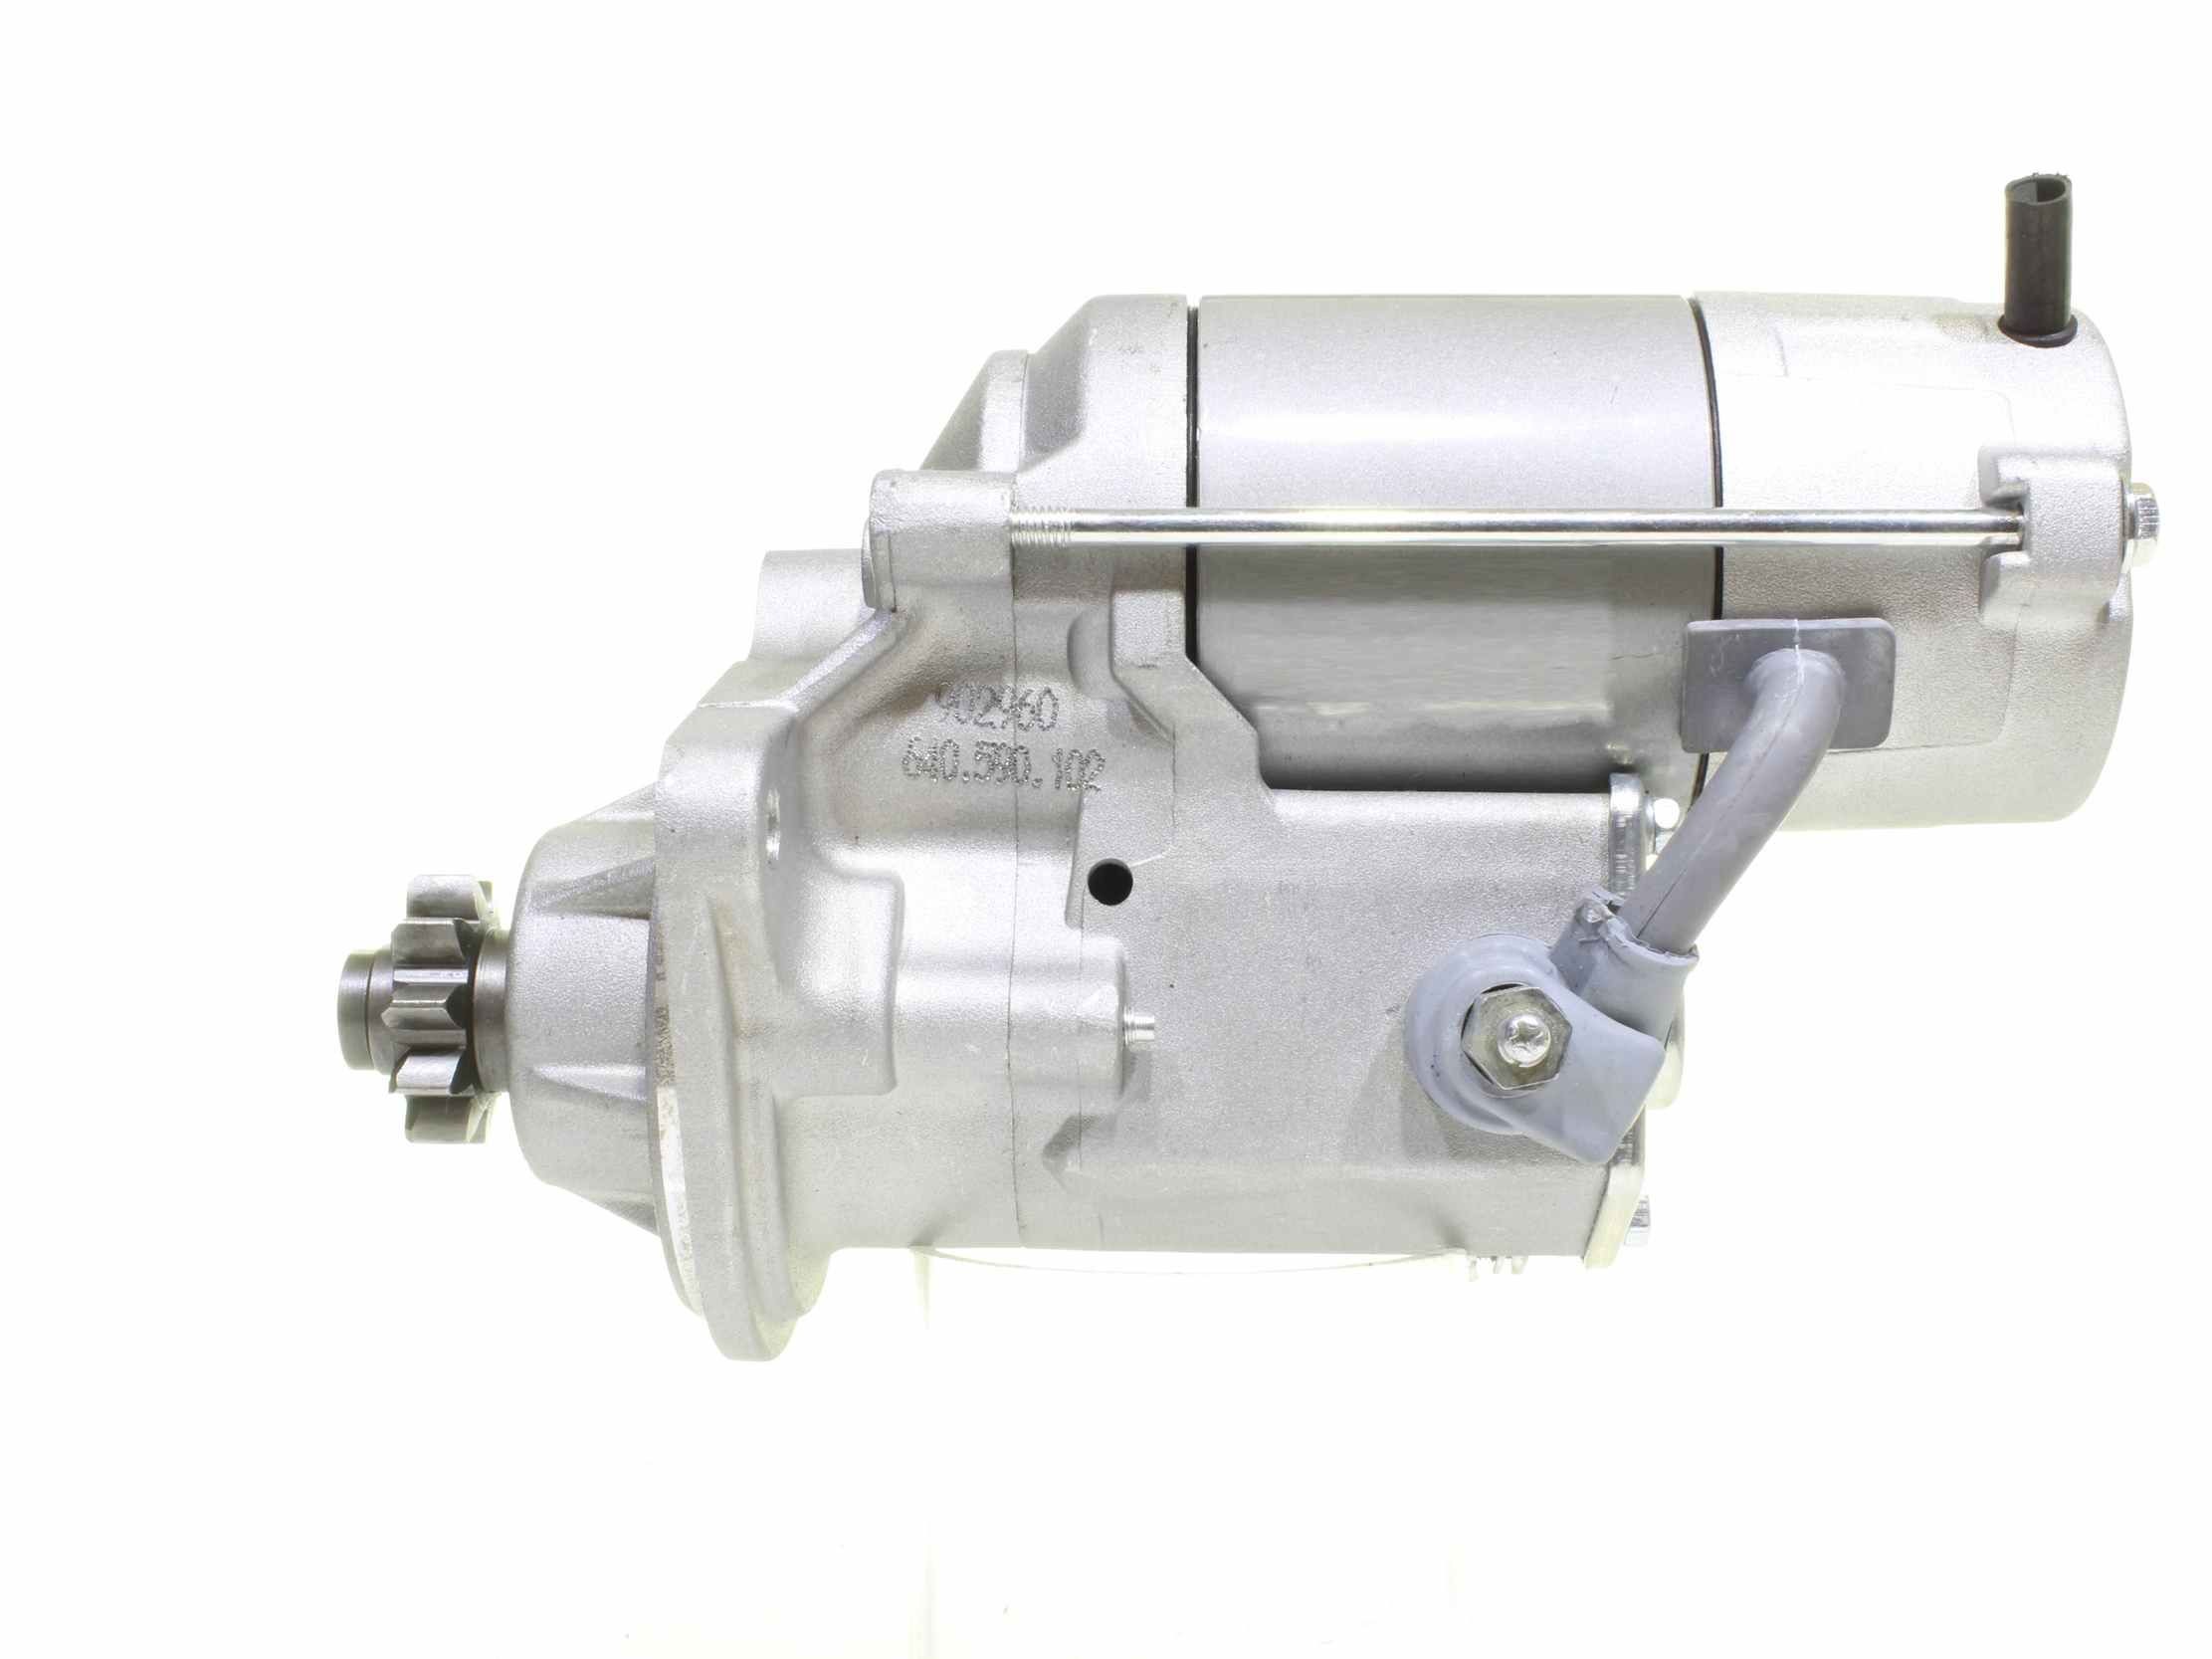 10441106 Engine starter motor ALANKO STR30040 review and test